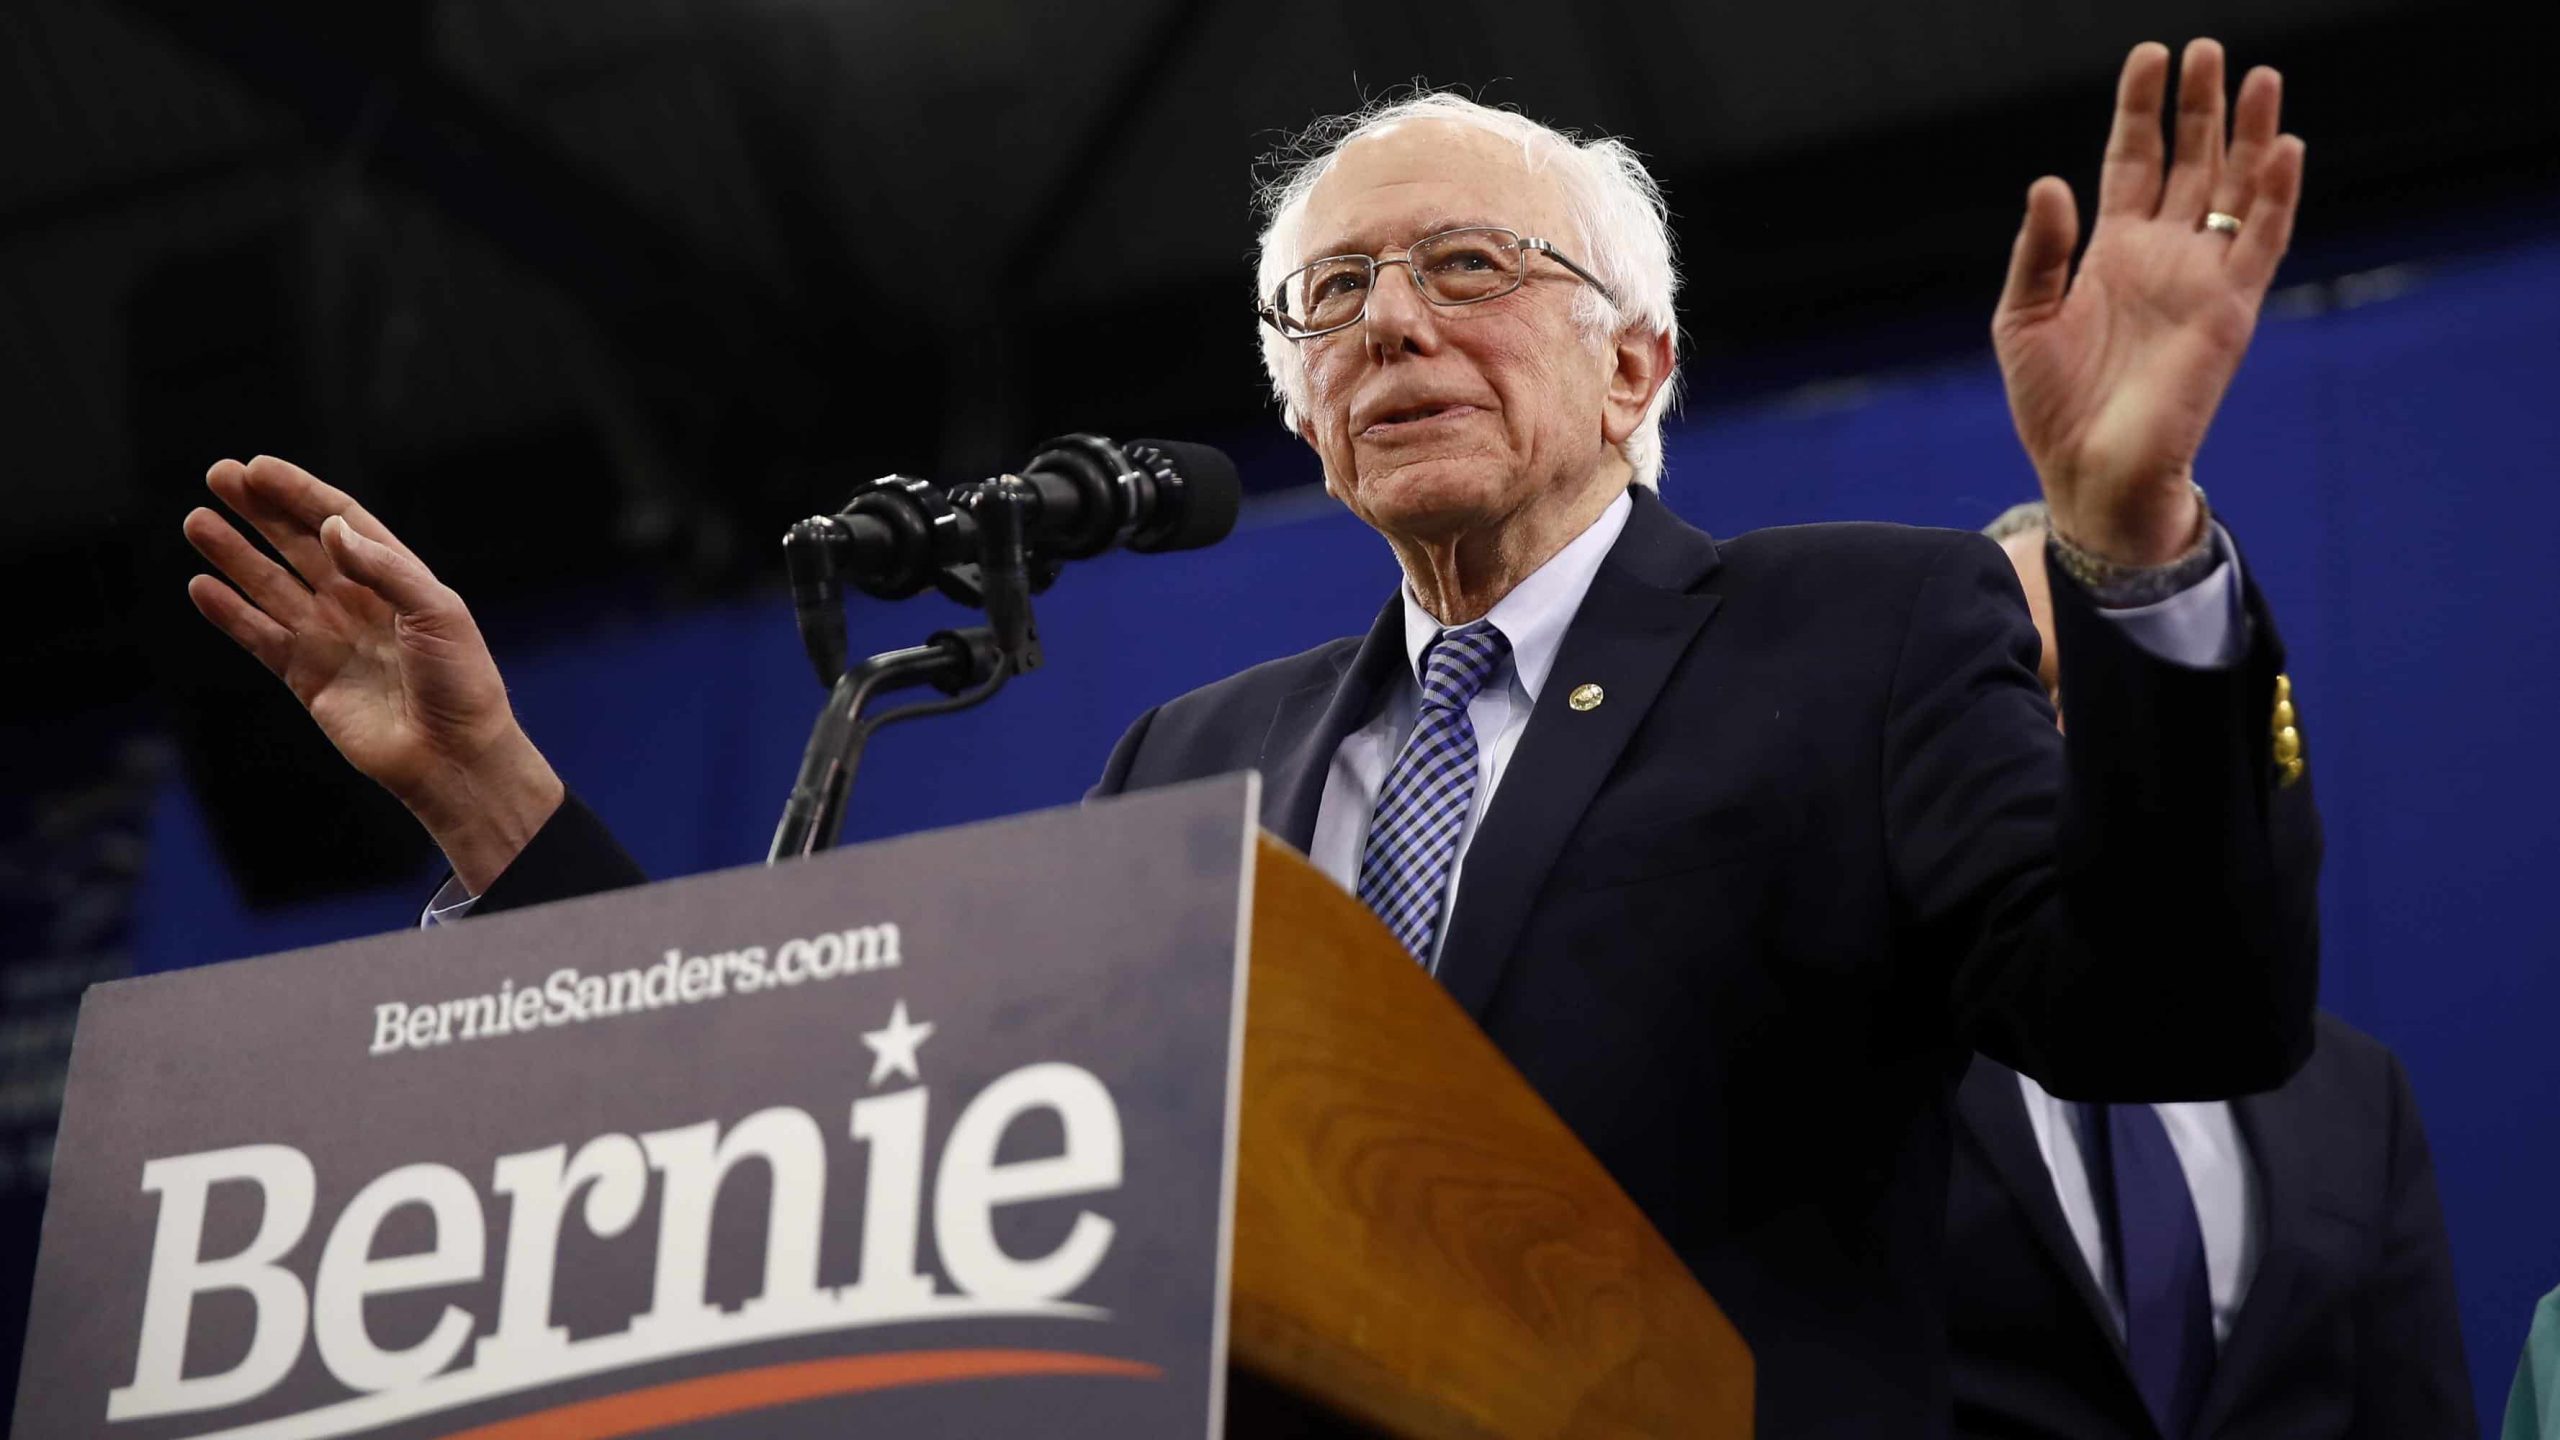 Billionaires should not exist – Bernie Sanders